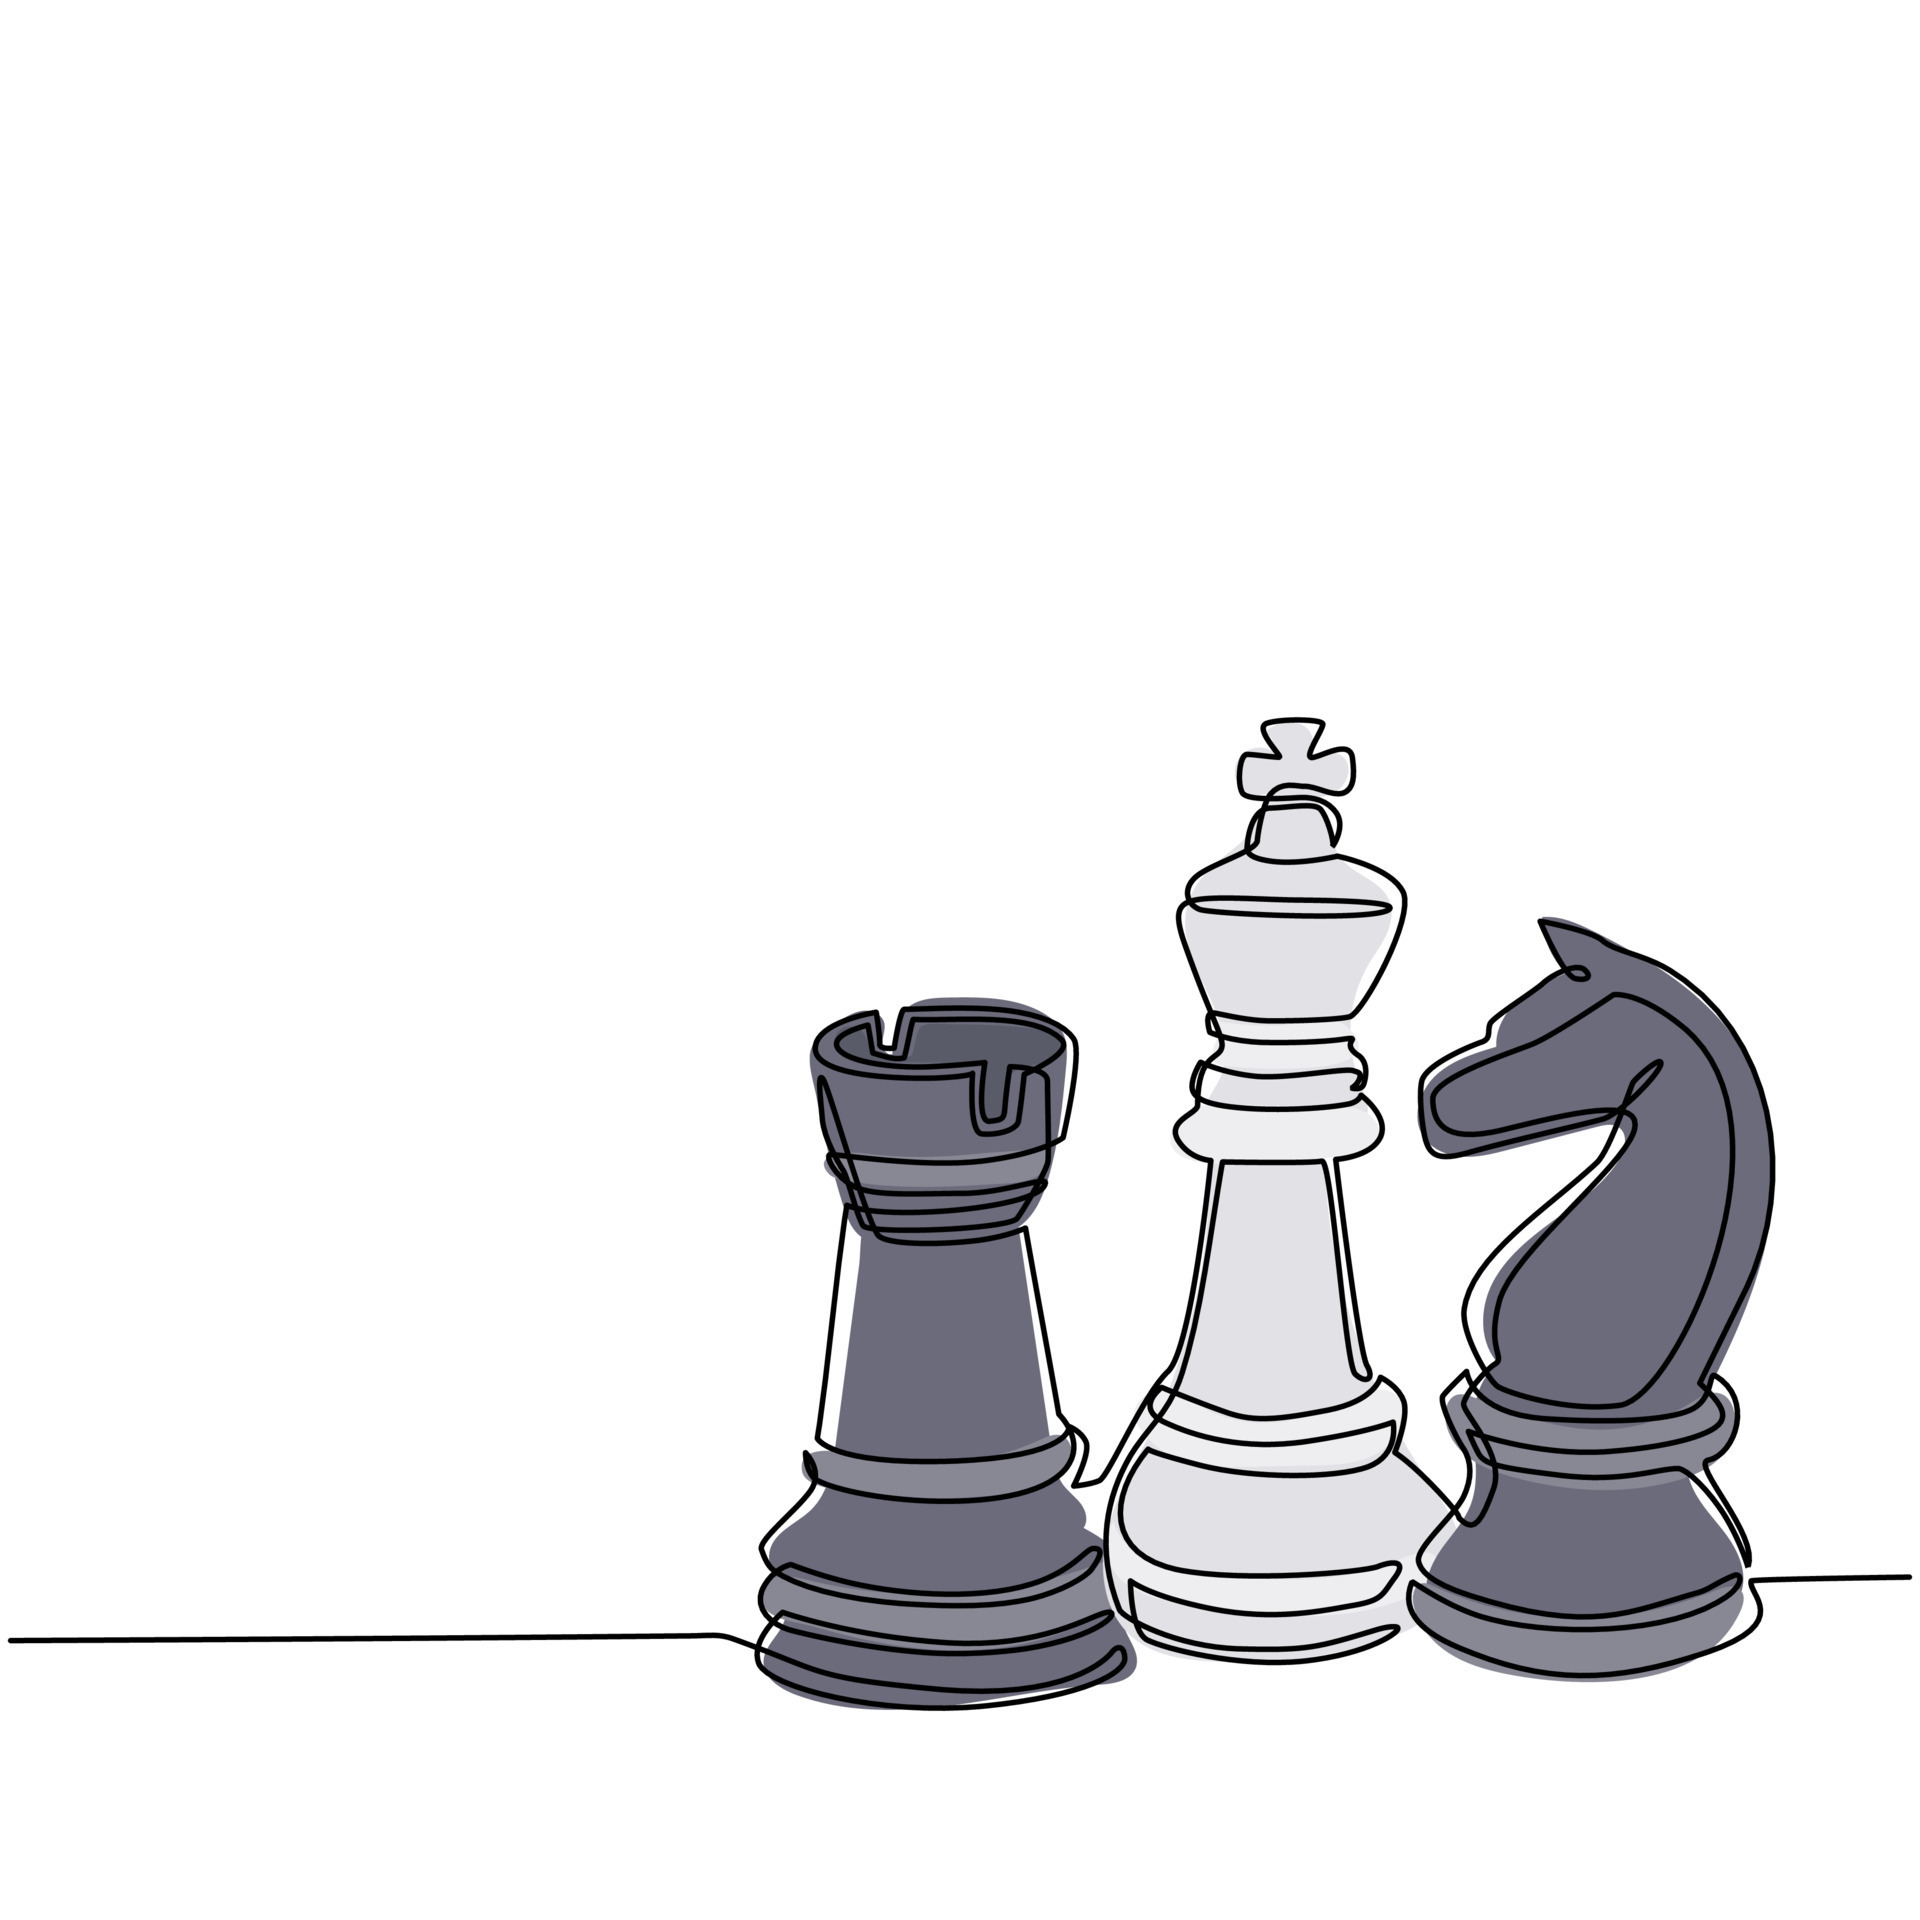 Premium Vector  Vector single cartoon illustration white rook chess figure